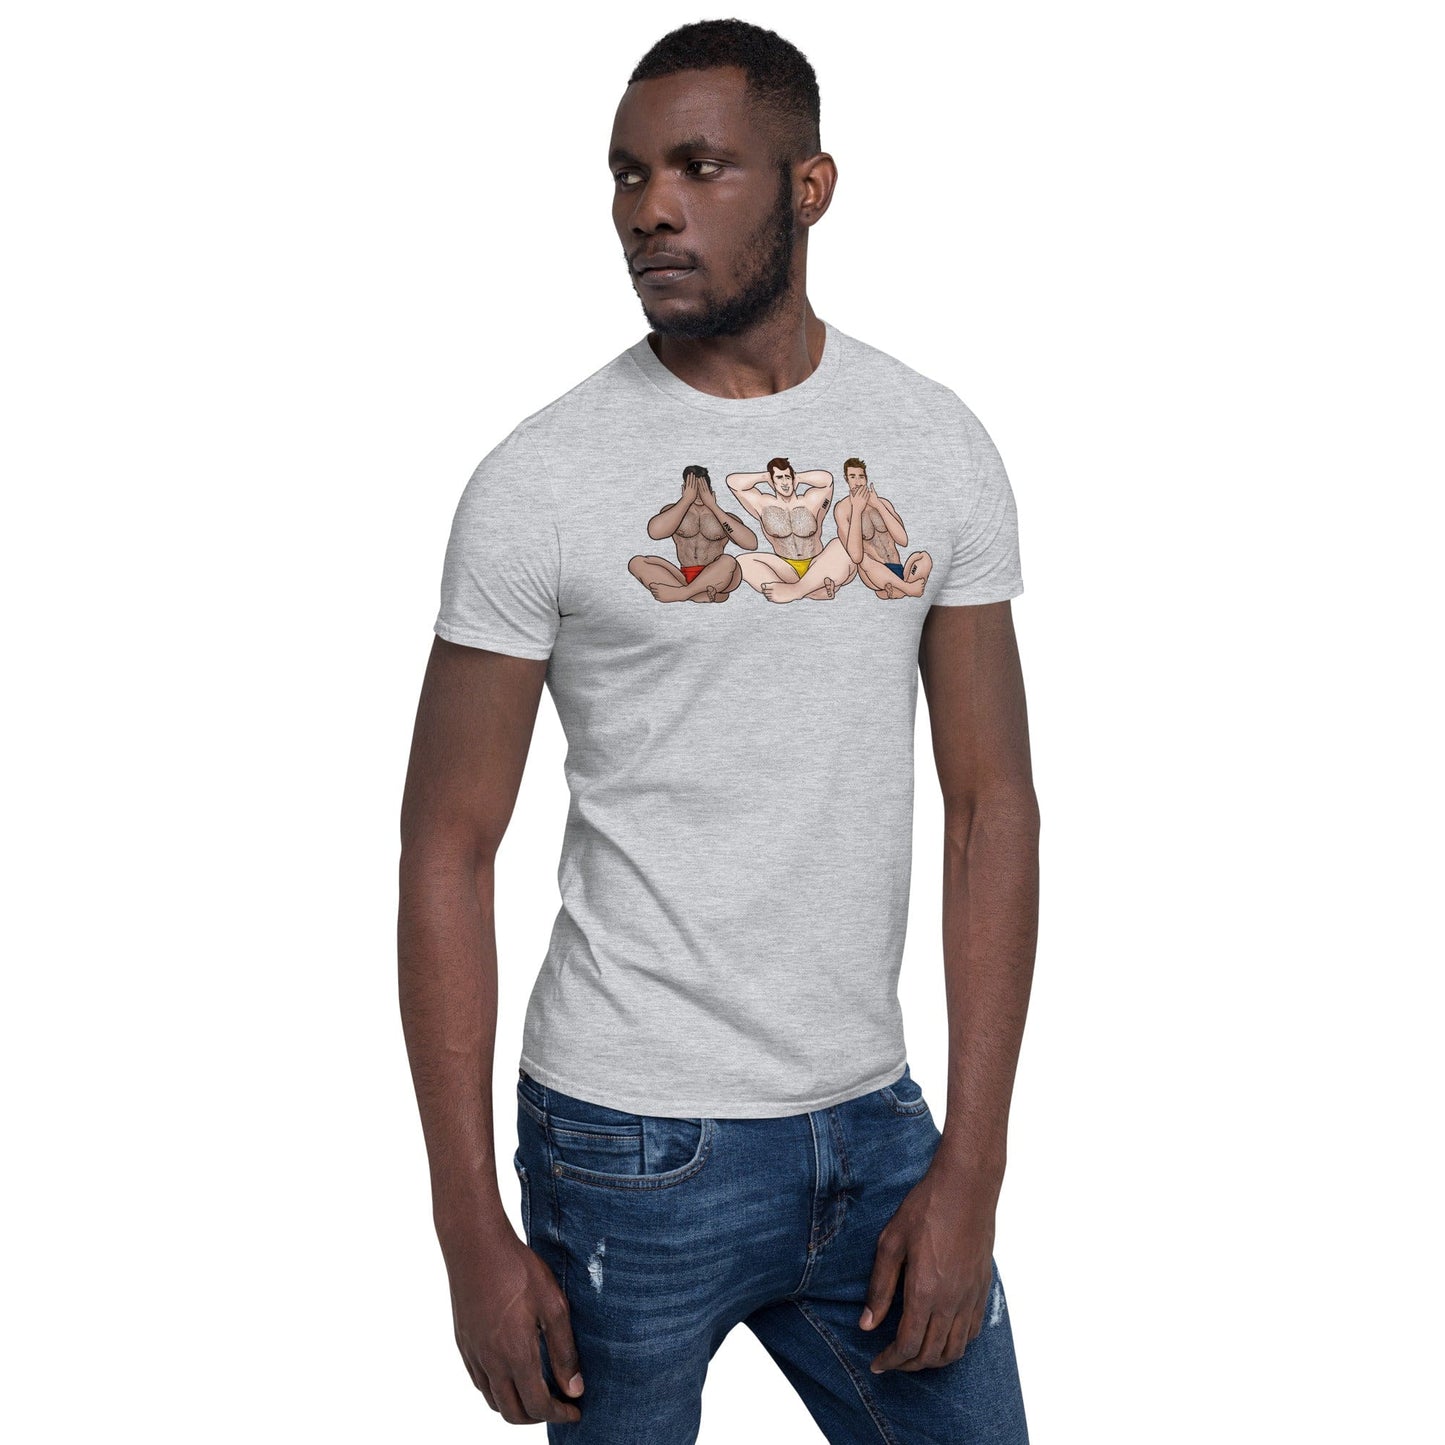 
                  
                    See No, Hear No, Speak No Evil Muscle Man T-Shirt INVI-Expressionwear
                  
                